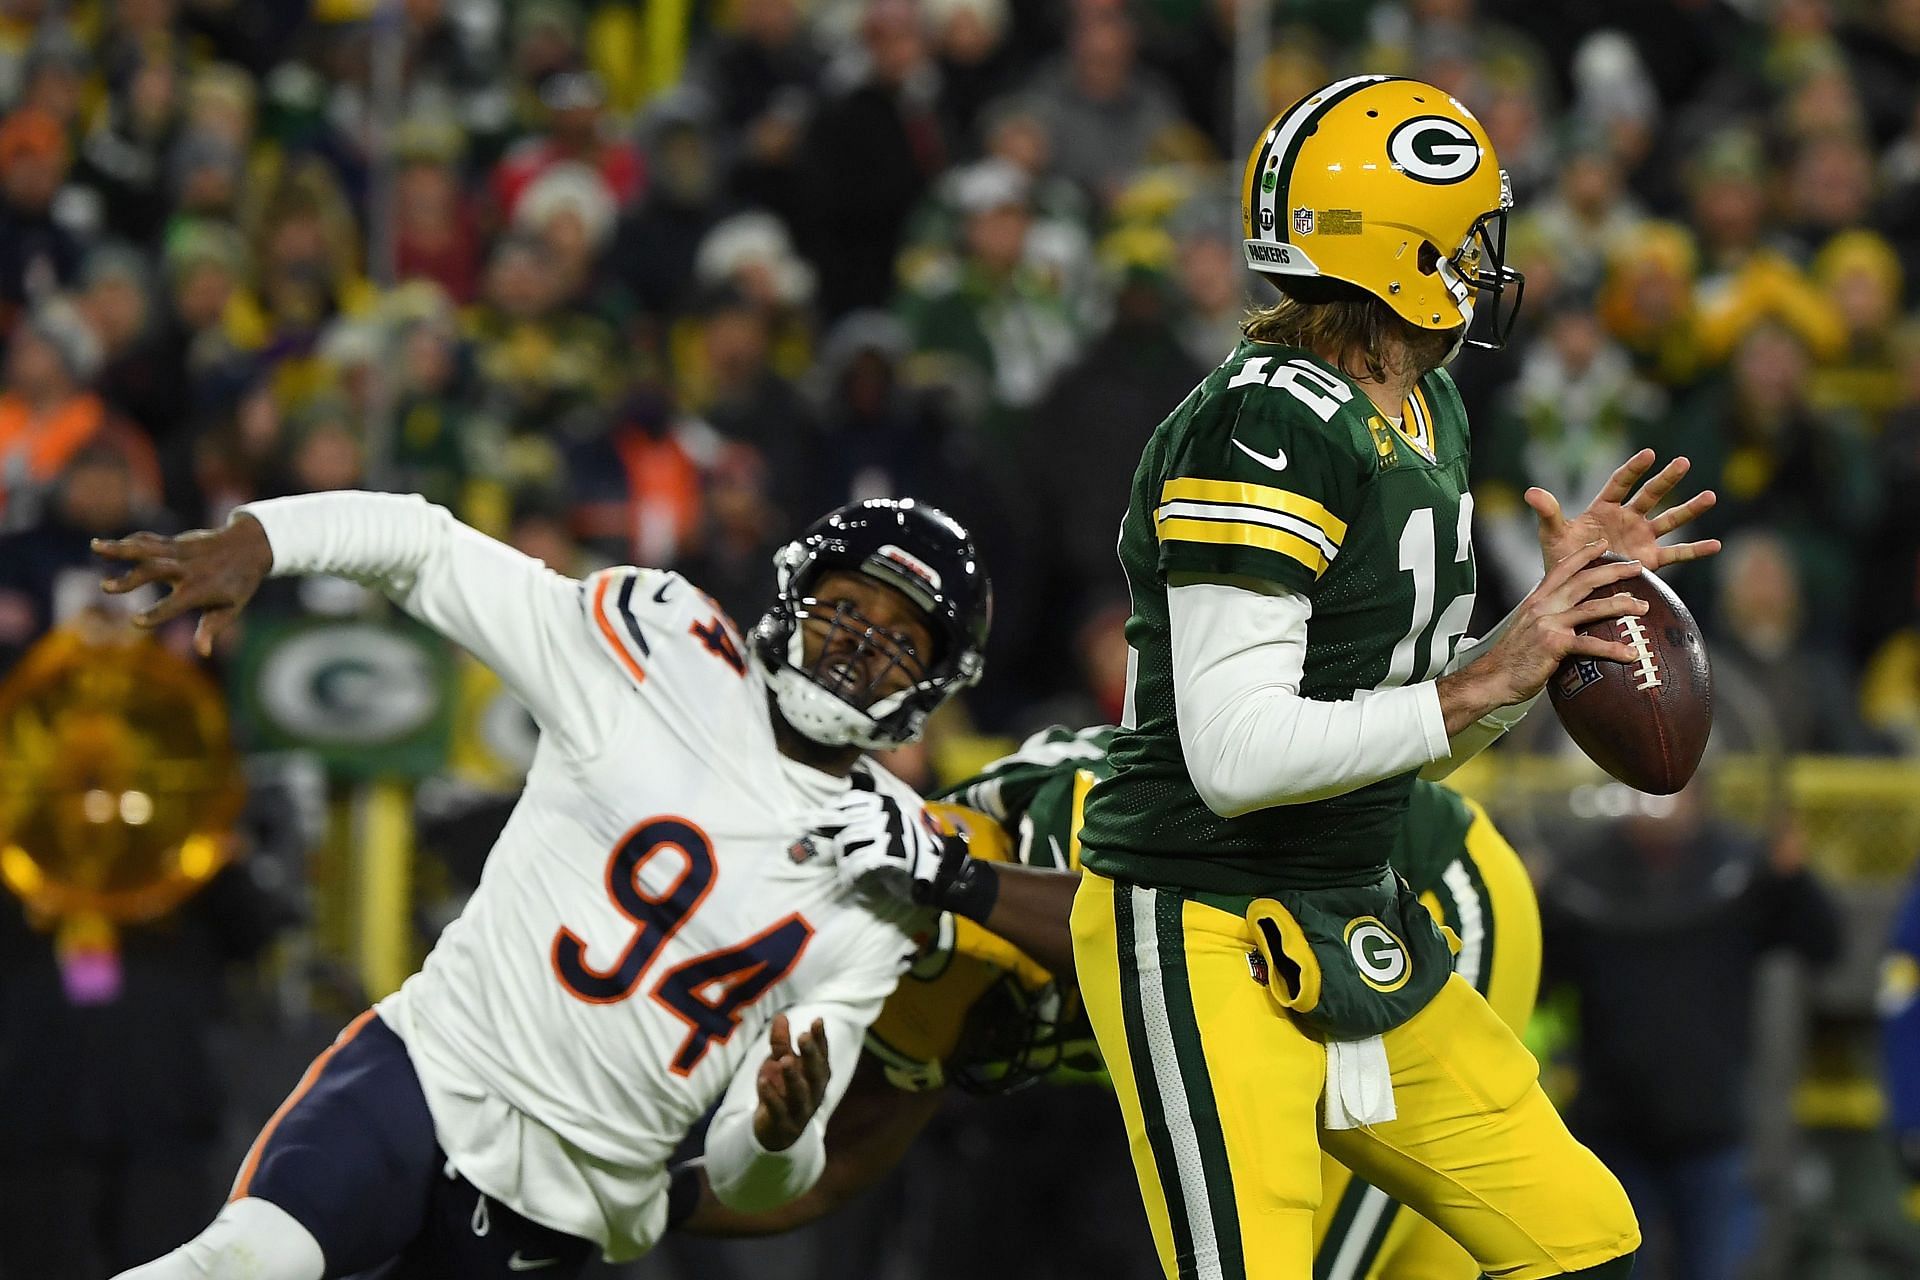 Chicago Bears edge rusher Robert Quinn pursuing Green Bay Packers quarterback Aaron Rodgers